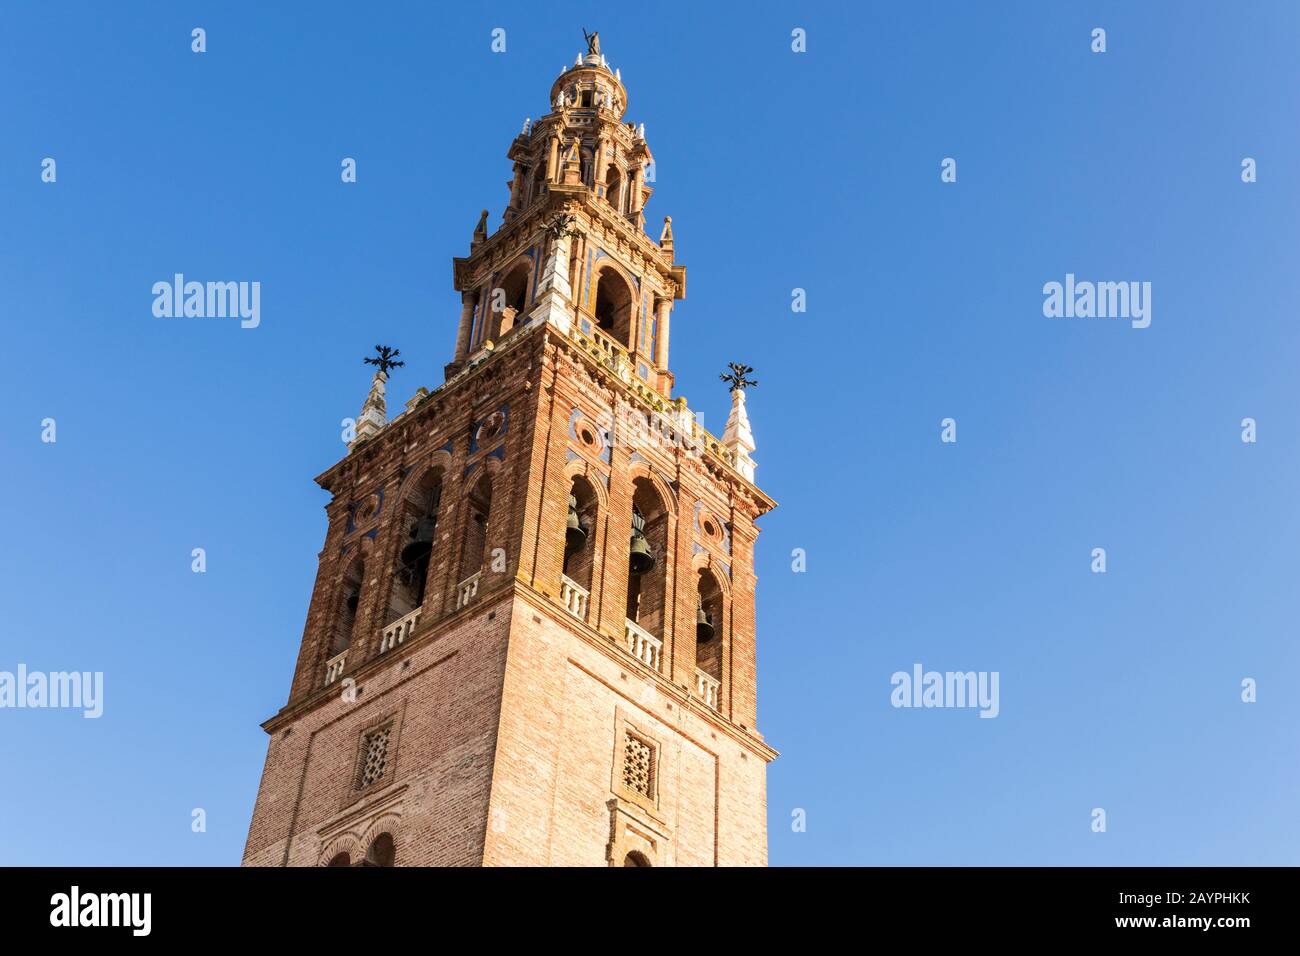 Carmona, Spain. The tower of the Iglesia de San Pedro (St Peter's Church) Stock Photo